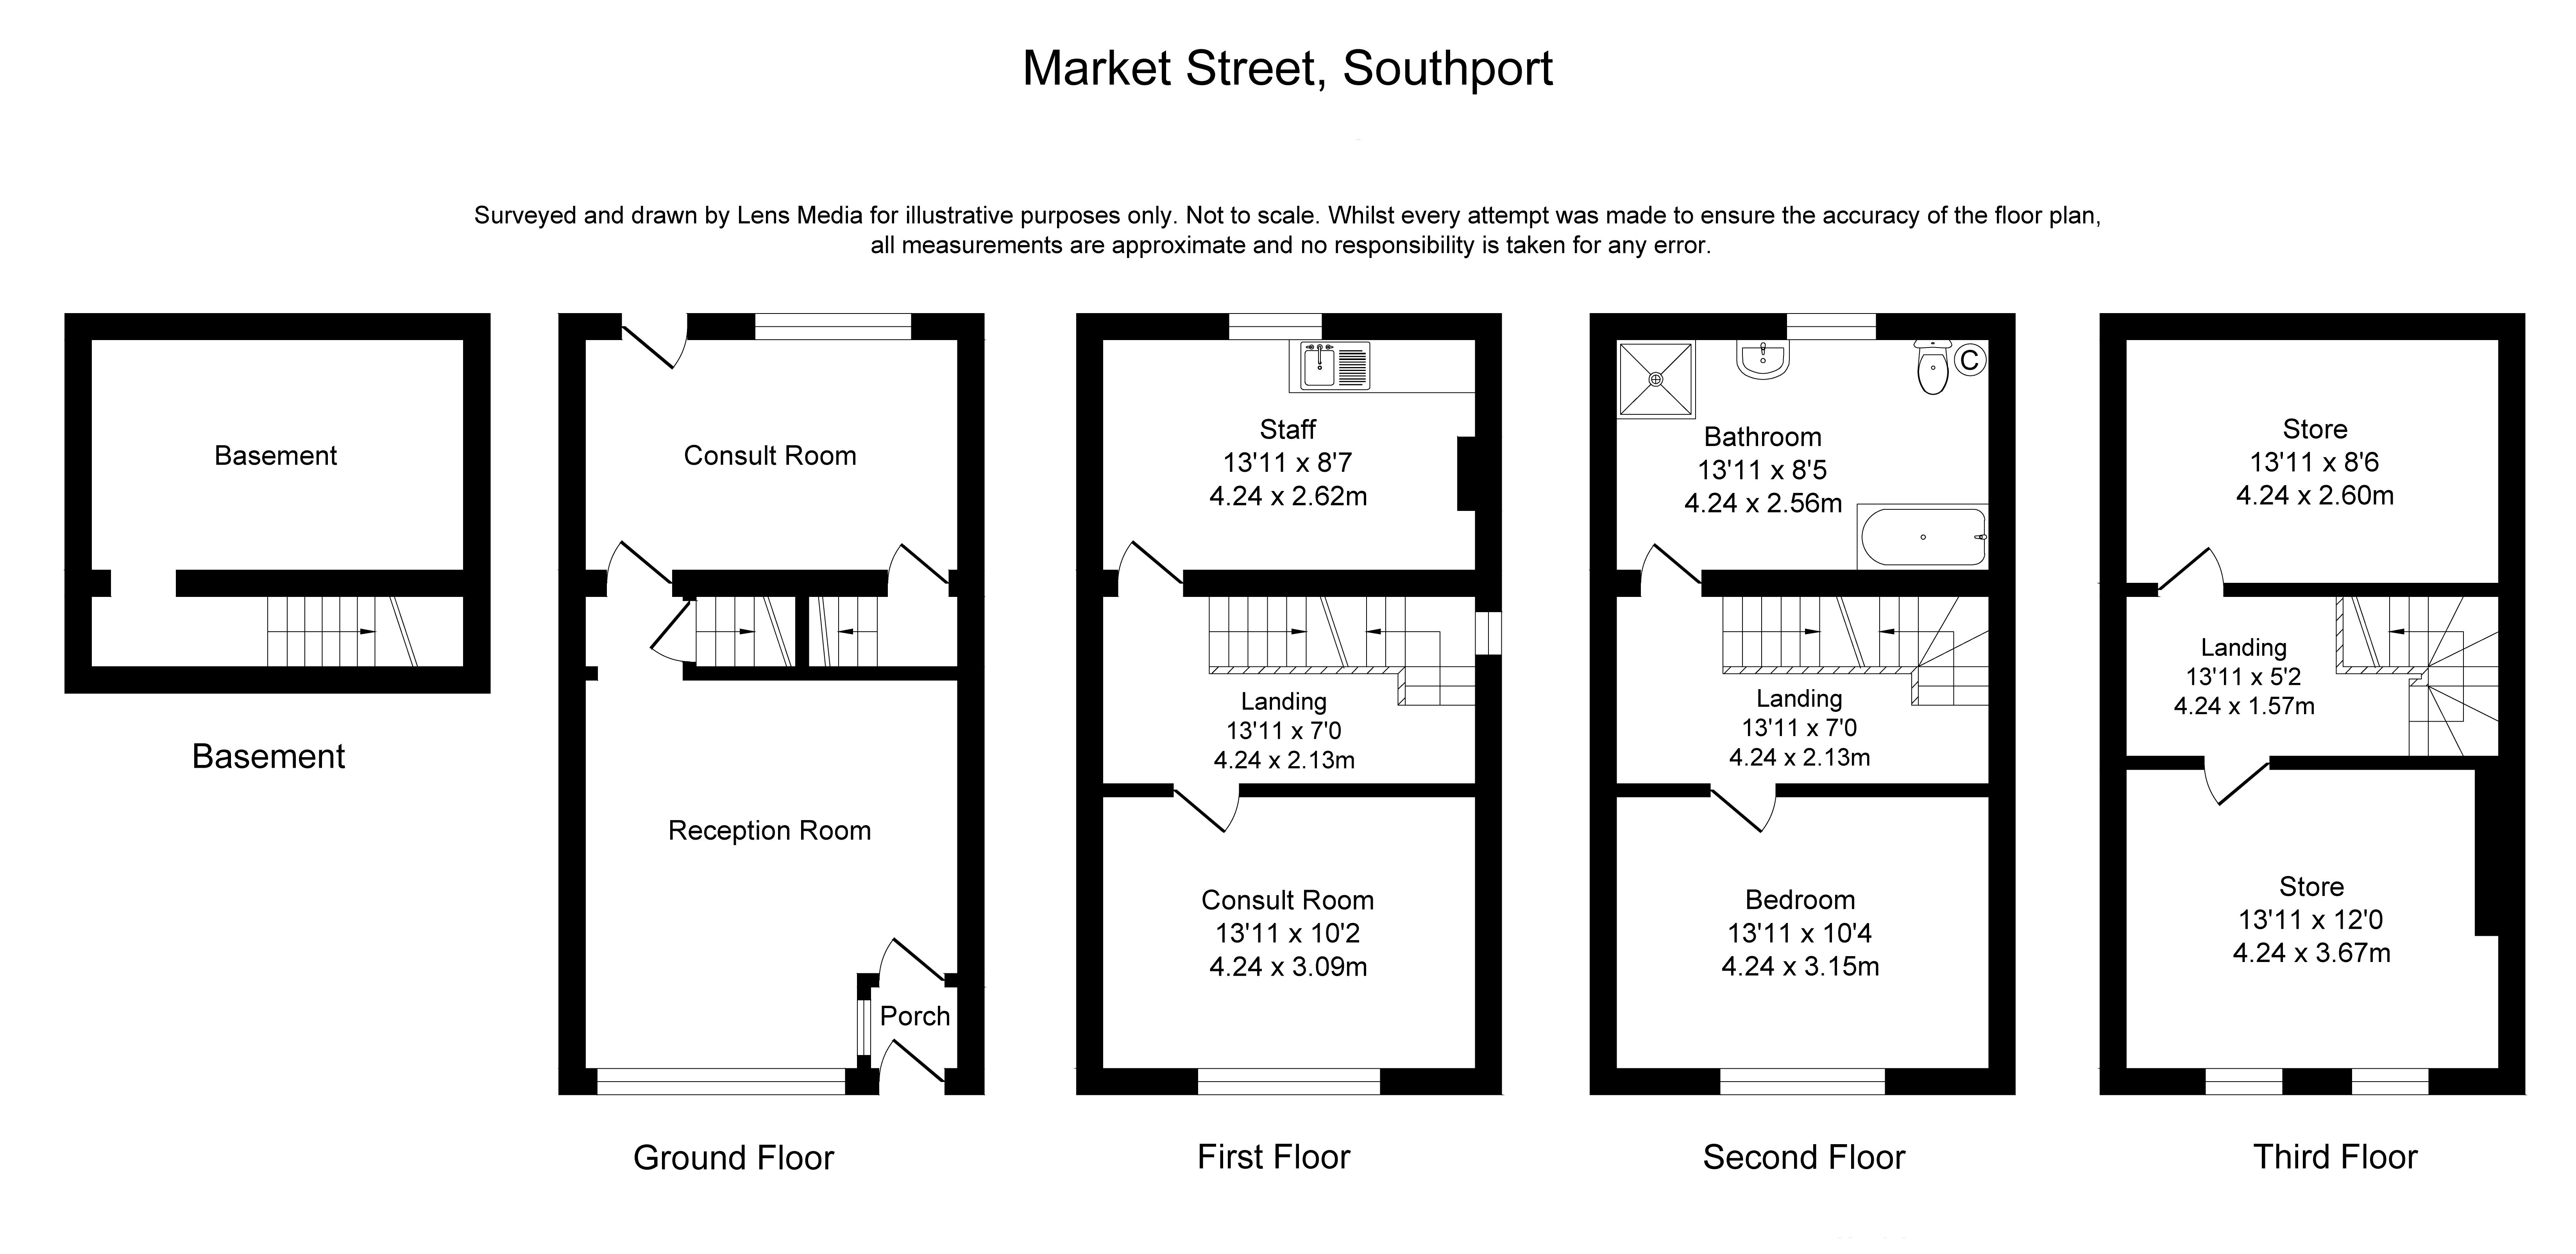 Floorplans For Market Street, Southport